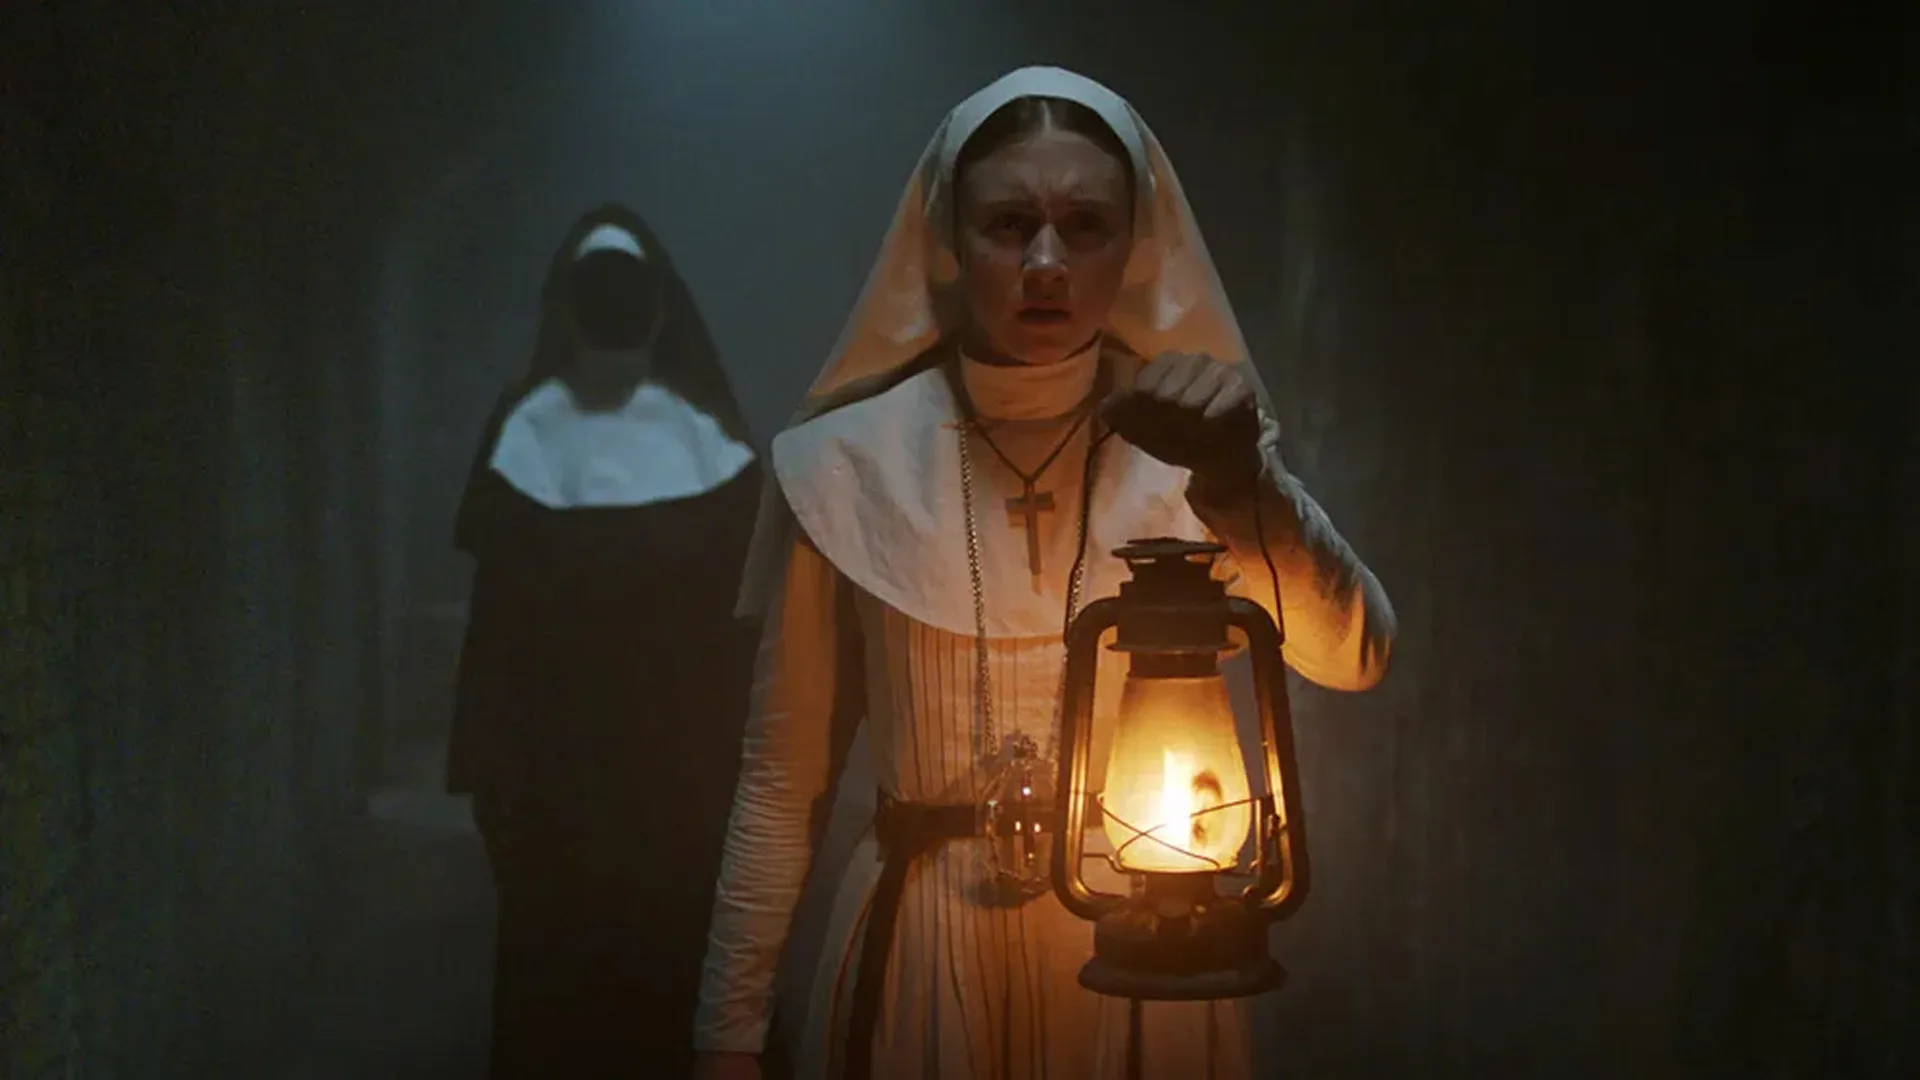 La monja escena del pasillo, películas de terror religioso